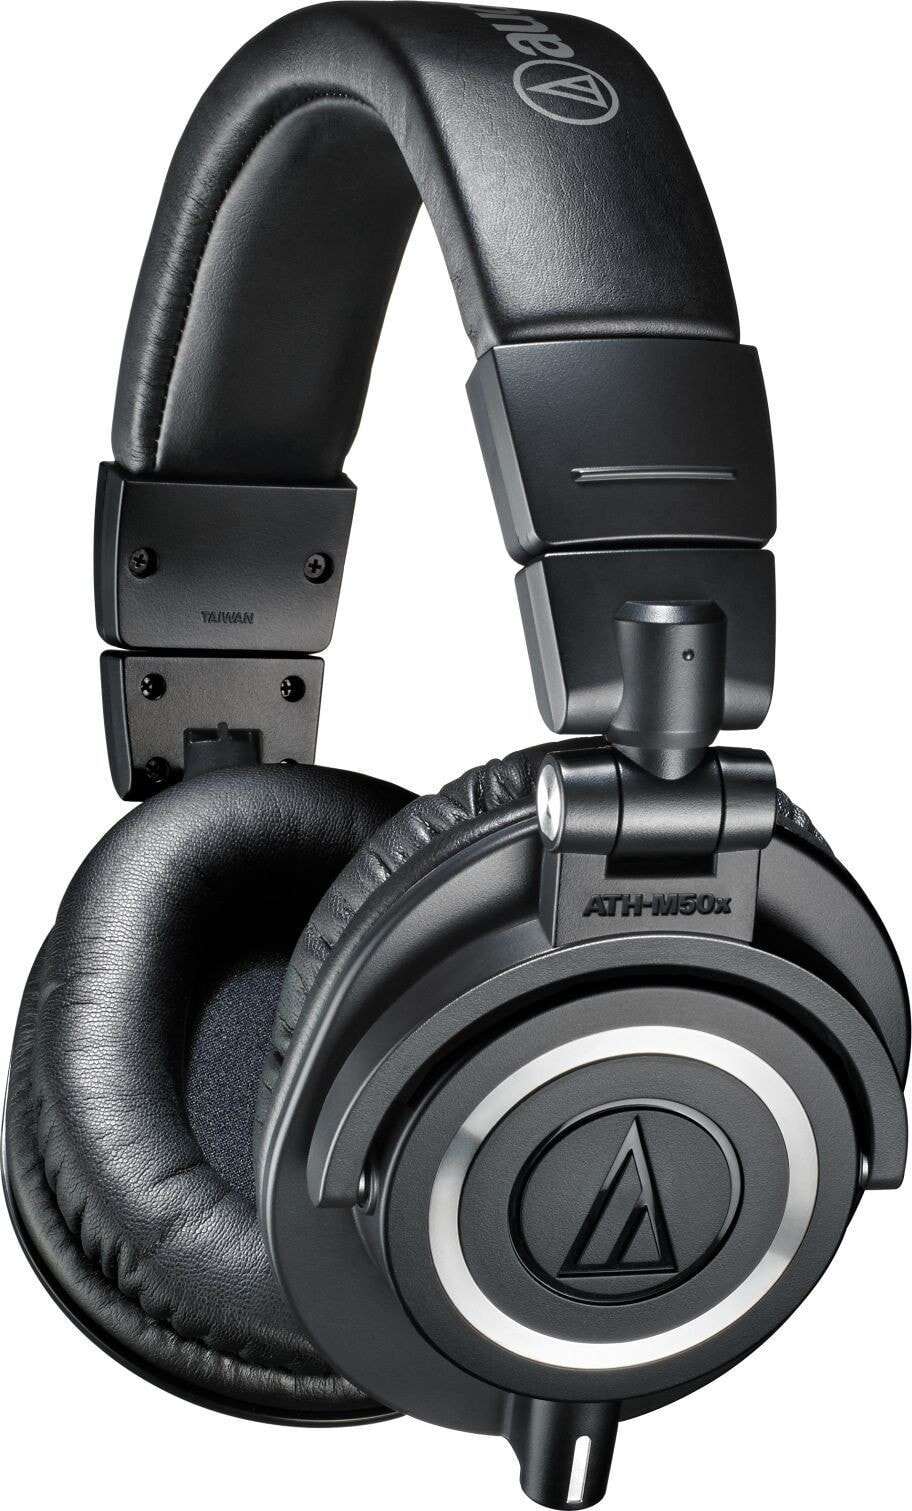 Audio-Technica ATH-M50X headphones